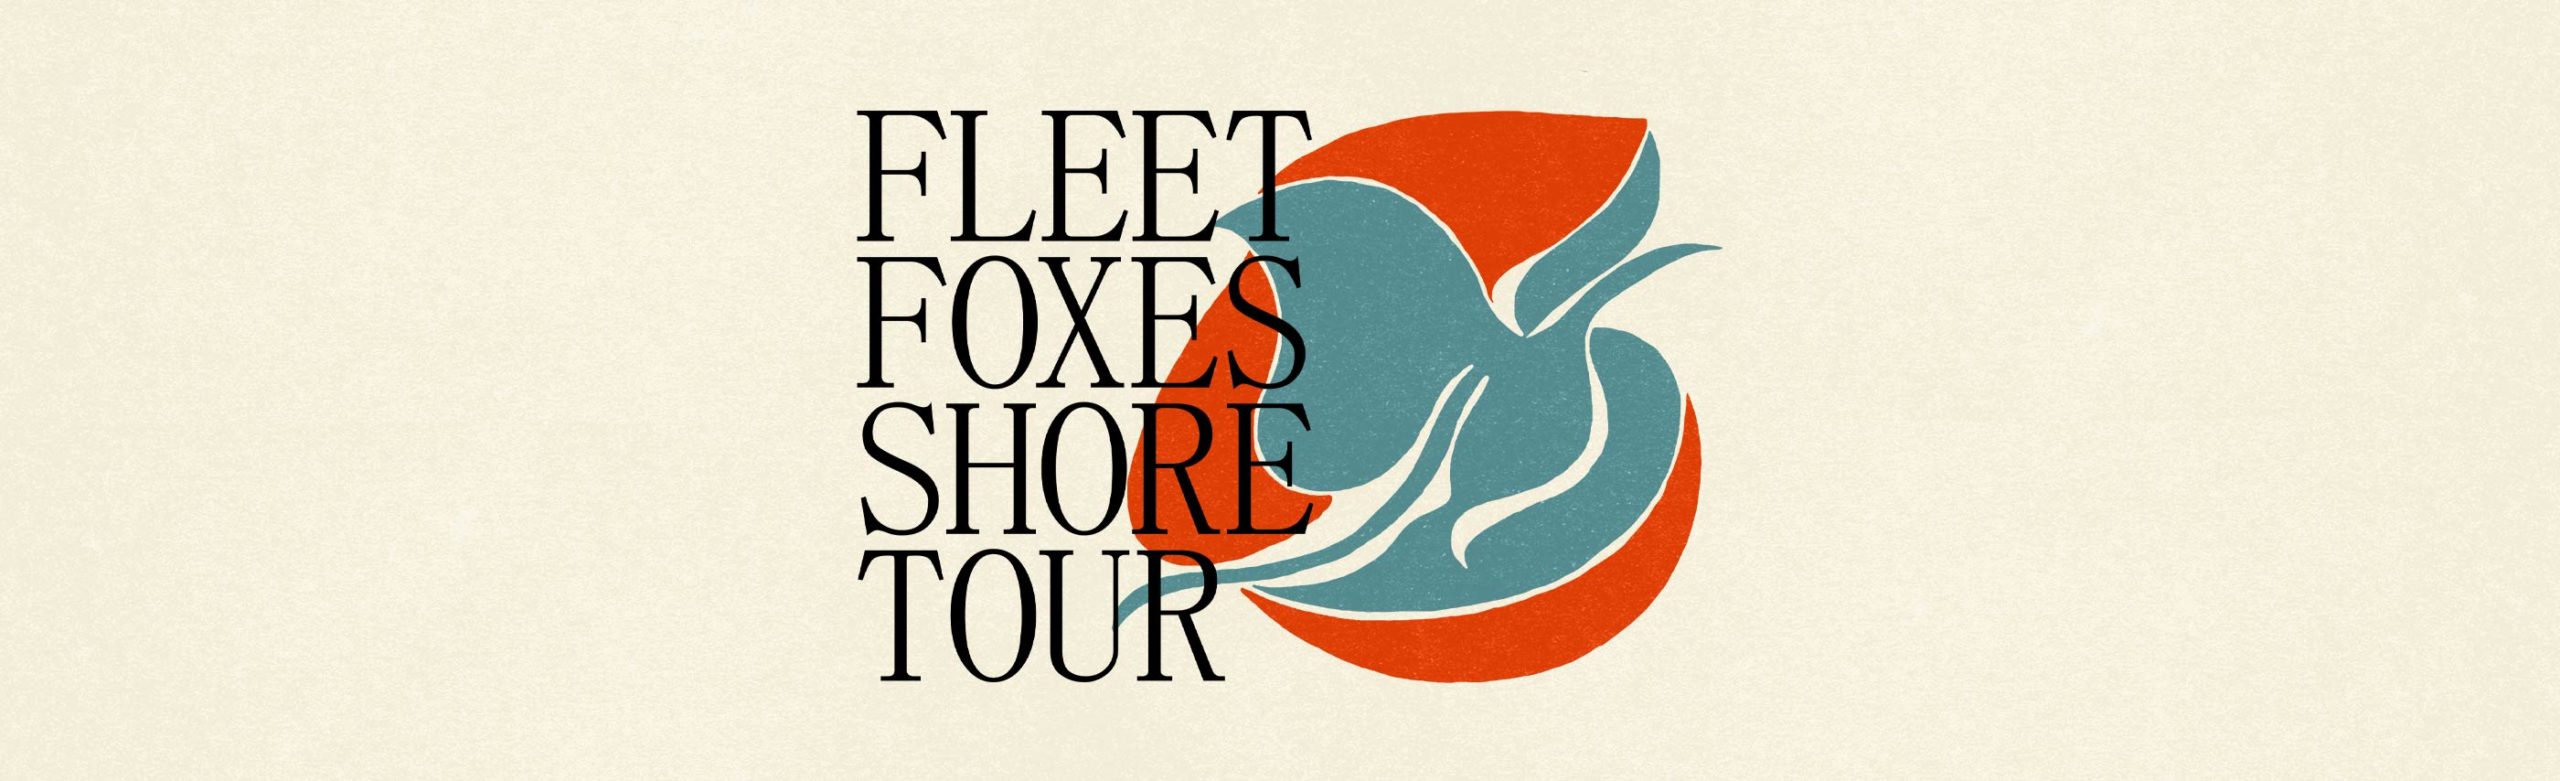 Fleet Foxes Tickets + Autographed 2LP ‘Shore’ Vinyl Giveaway 2022 Image